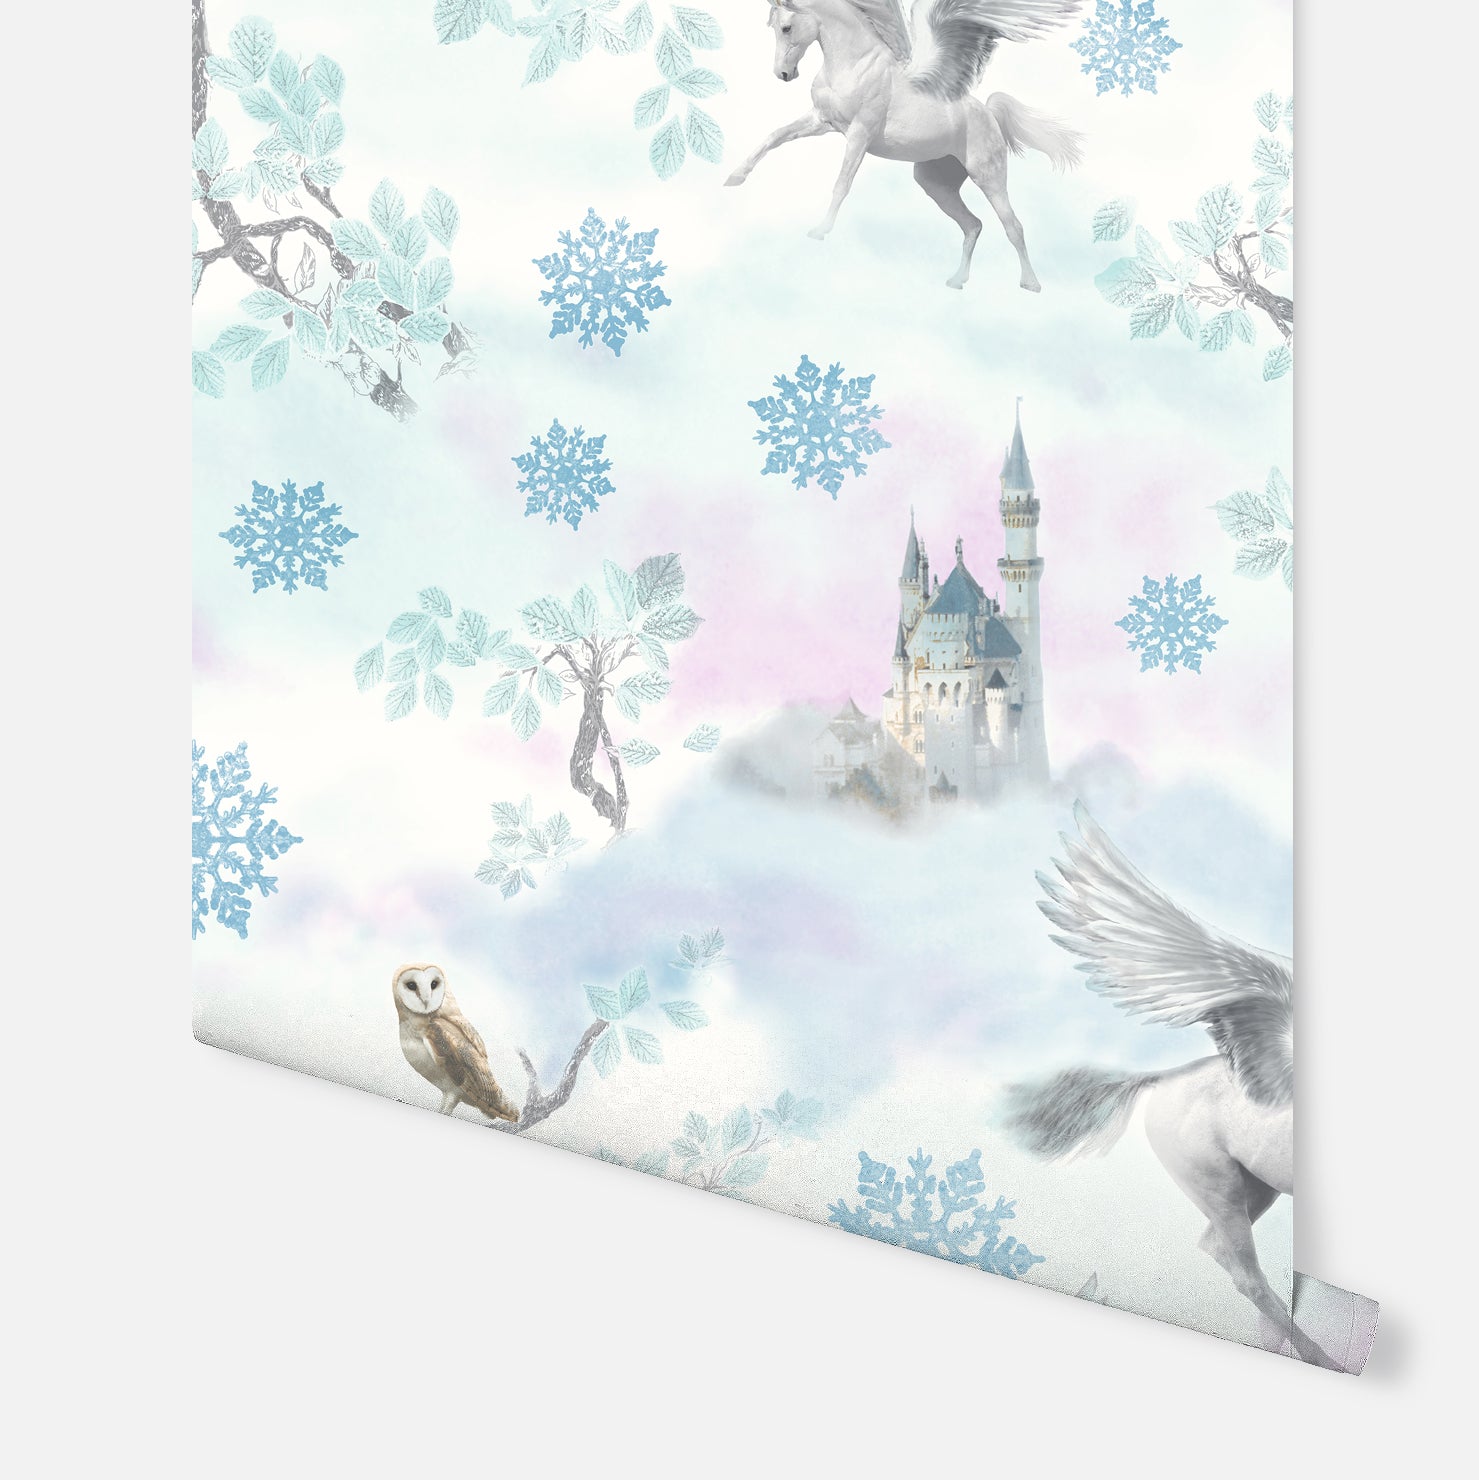 Fairytale Ice Blue Wallpaper